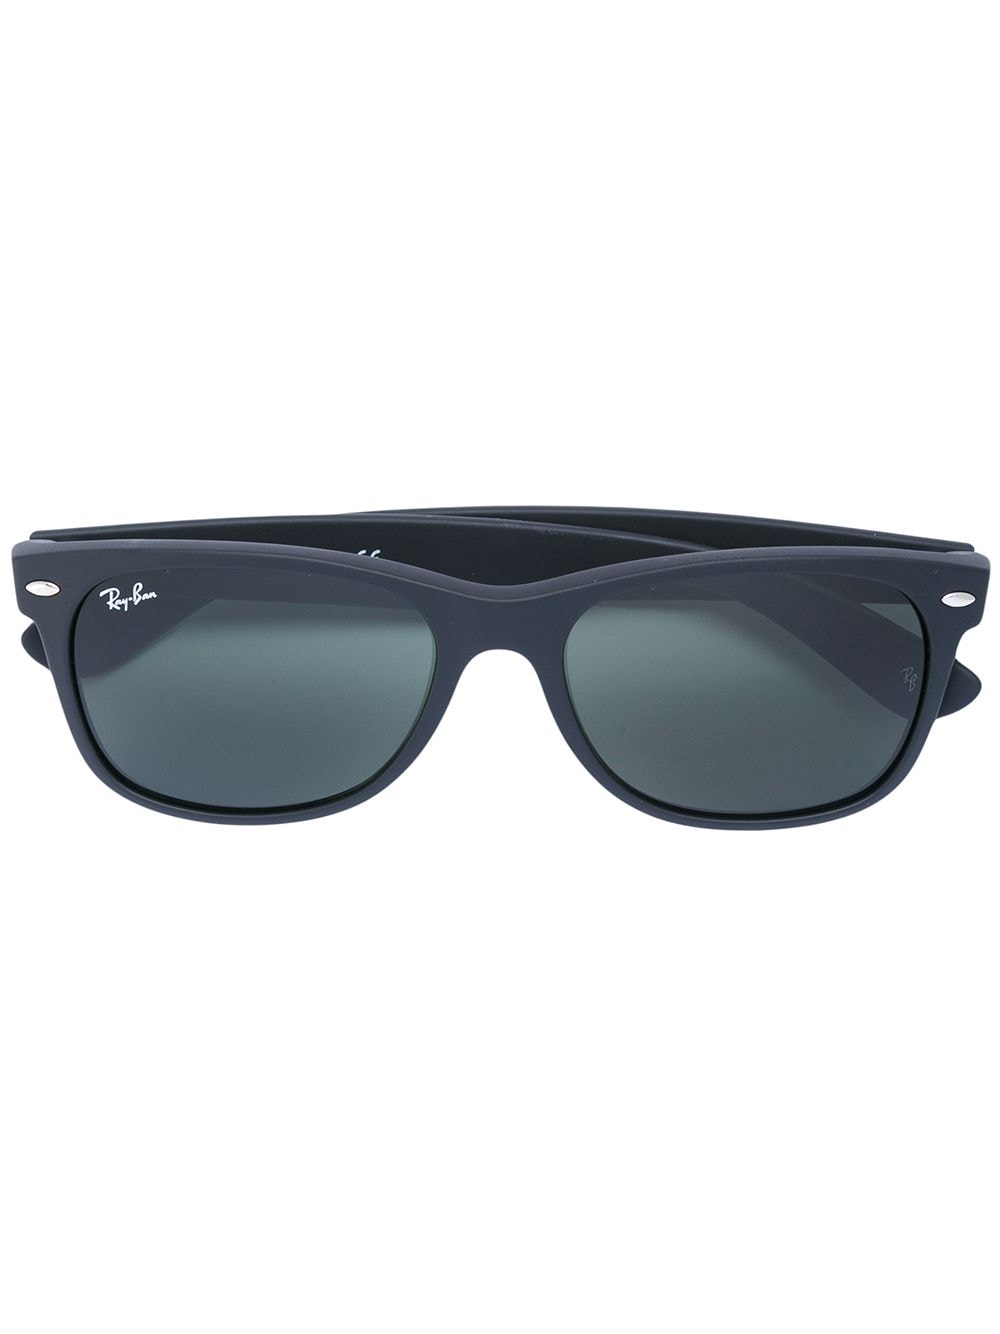 Ray-Ban square shaped sunglasses - Black von Ray-Ban